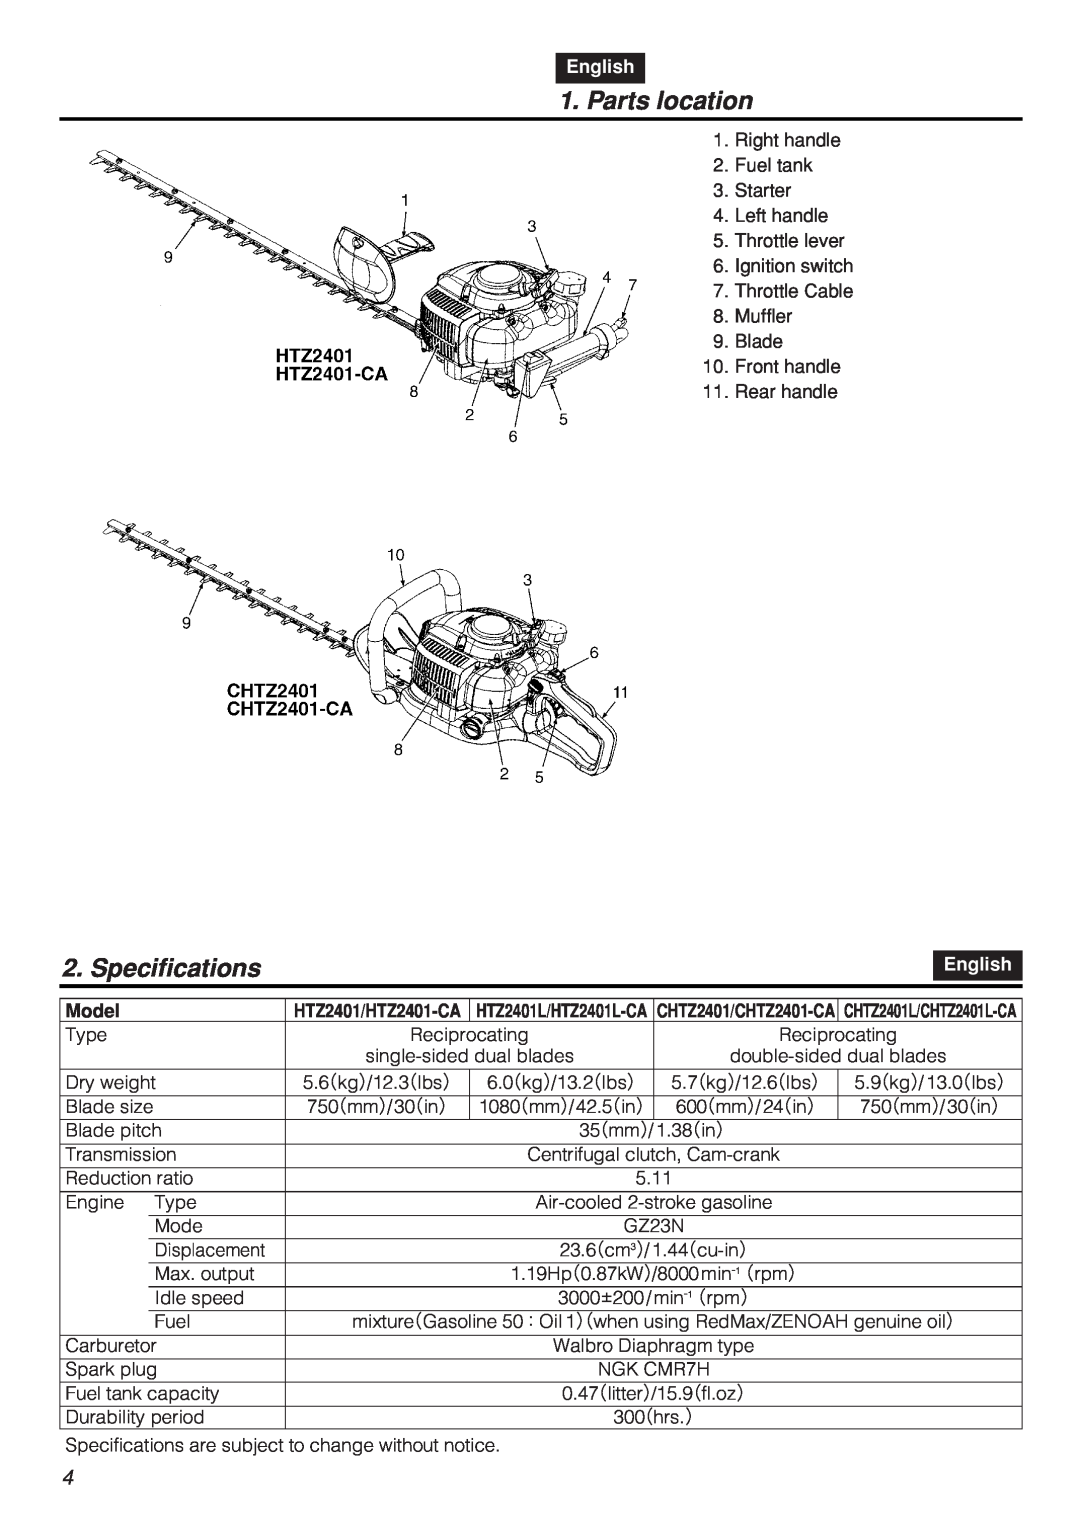 Zenoah CHTZ2401L-CA, CHTZ2401-CA manual Parts location, Specifications, English, Model 